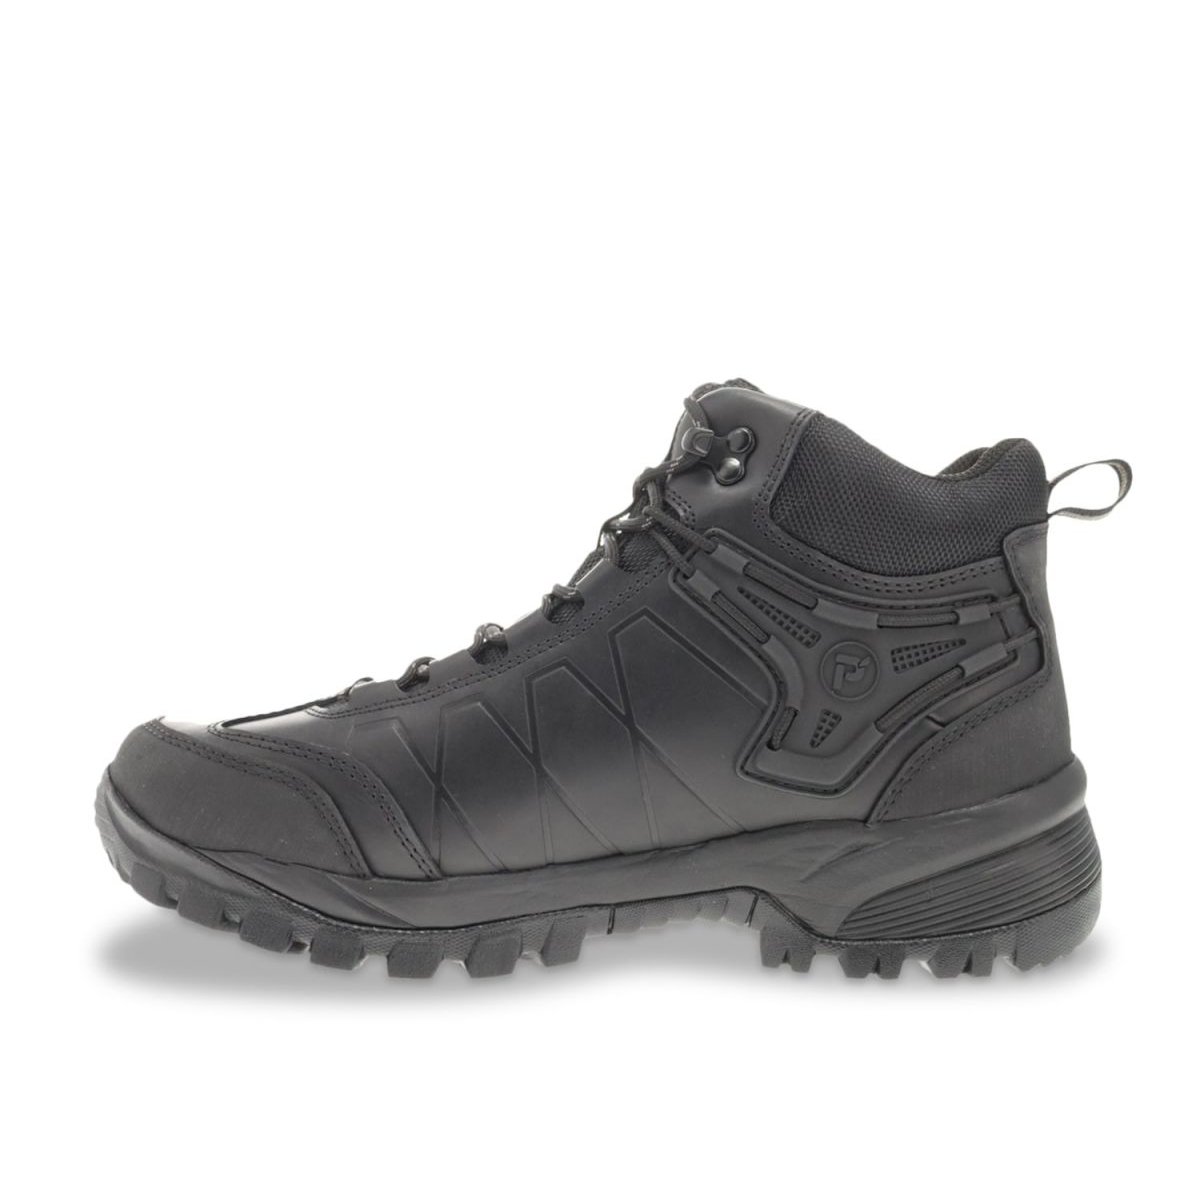 Propet Men's Ridge Walker Force Hiking Boots Black - MBA052LBLK BLACK - BLACK, 11.5 X-Wide